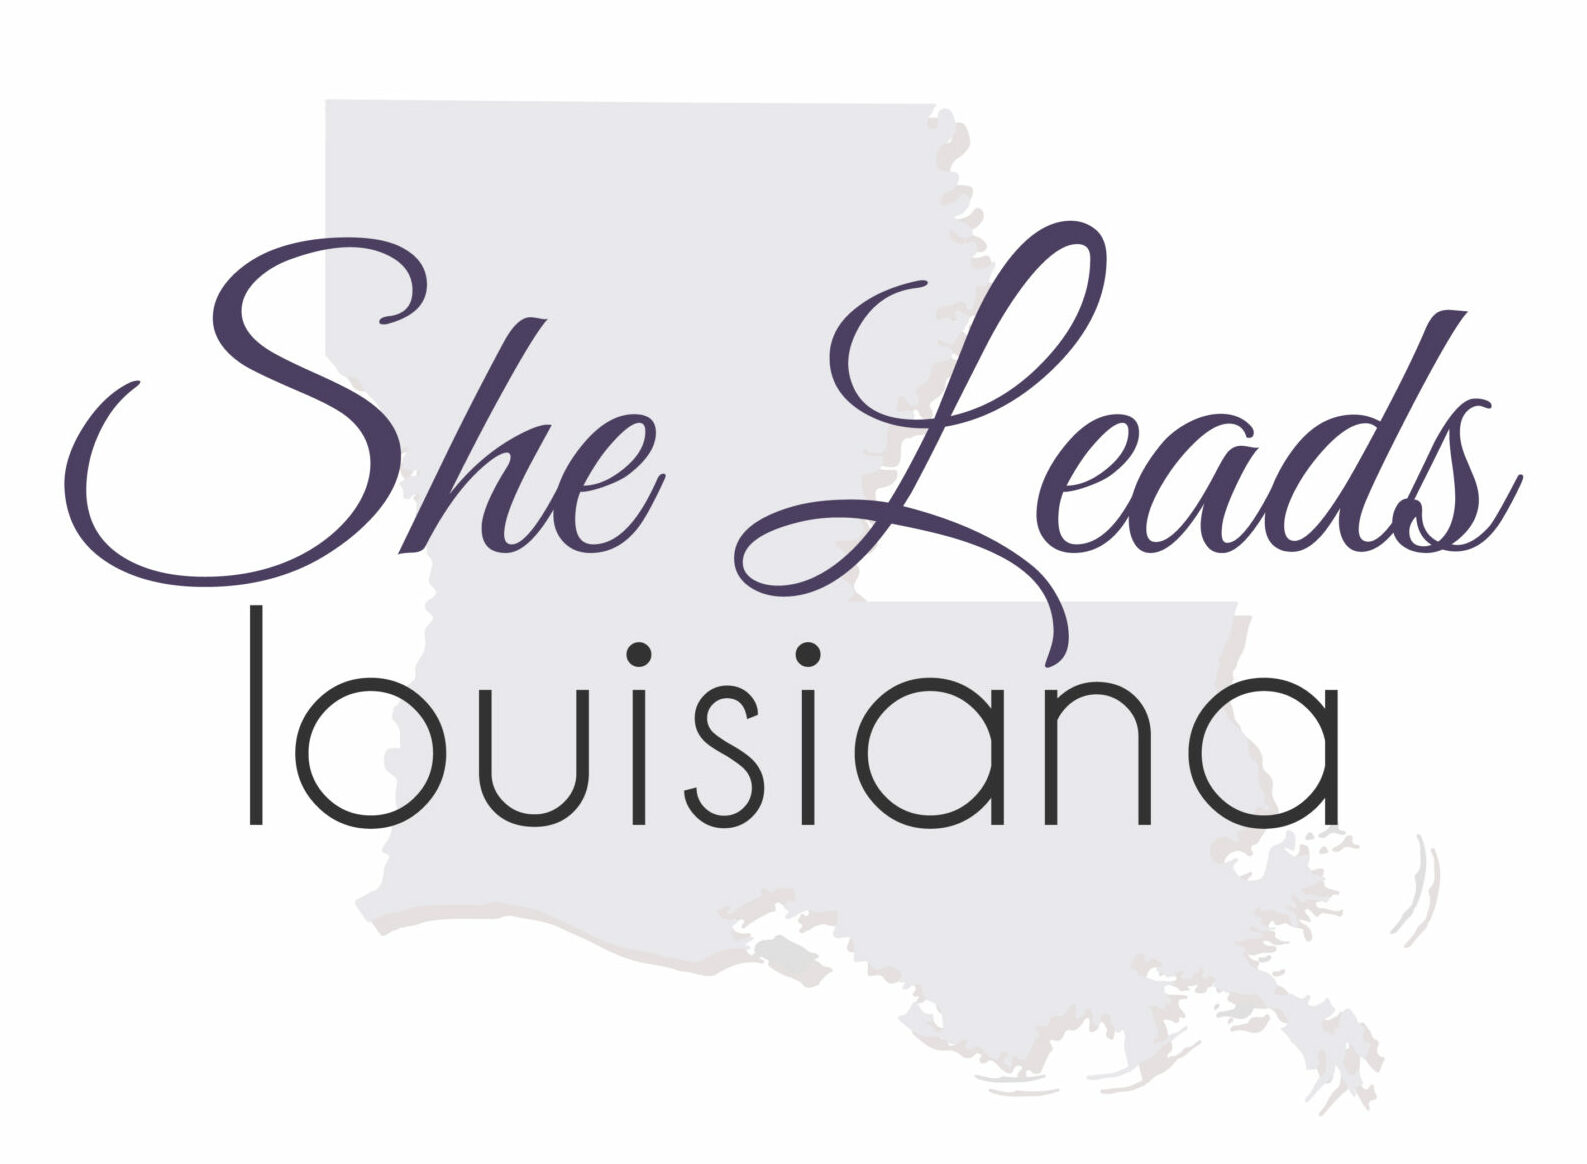 She Leads Louisiana